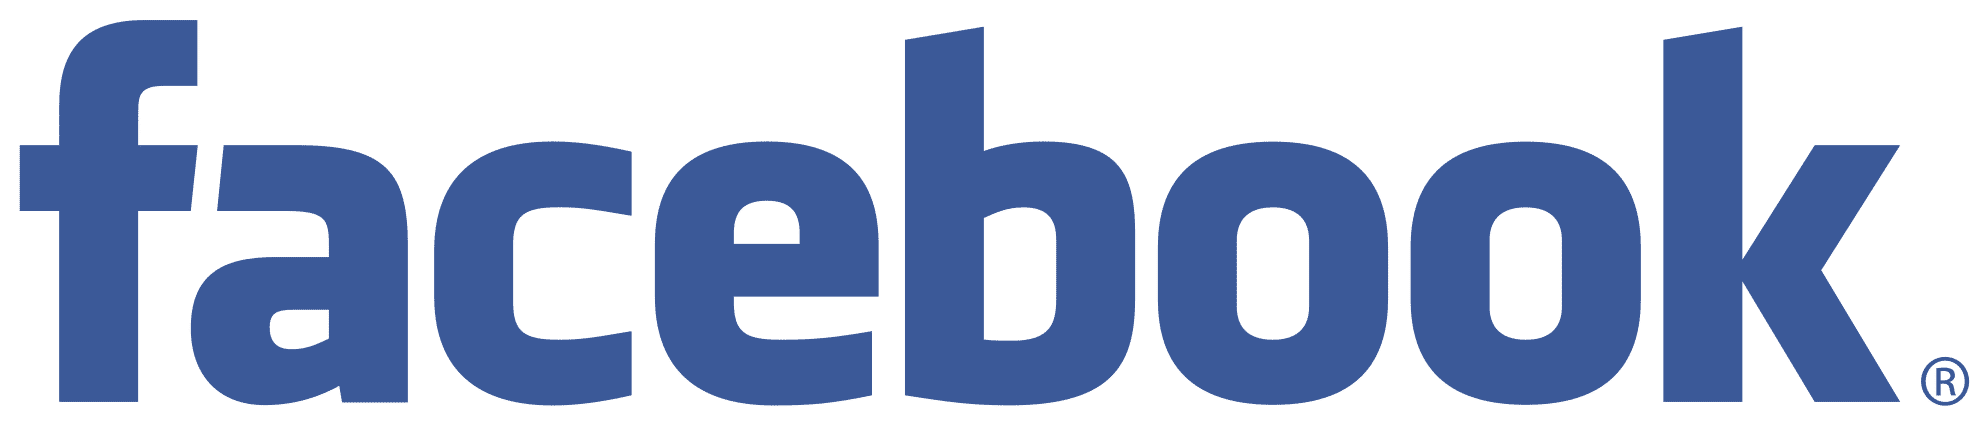 facebook-1-logo-png-transparent